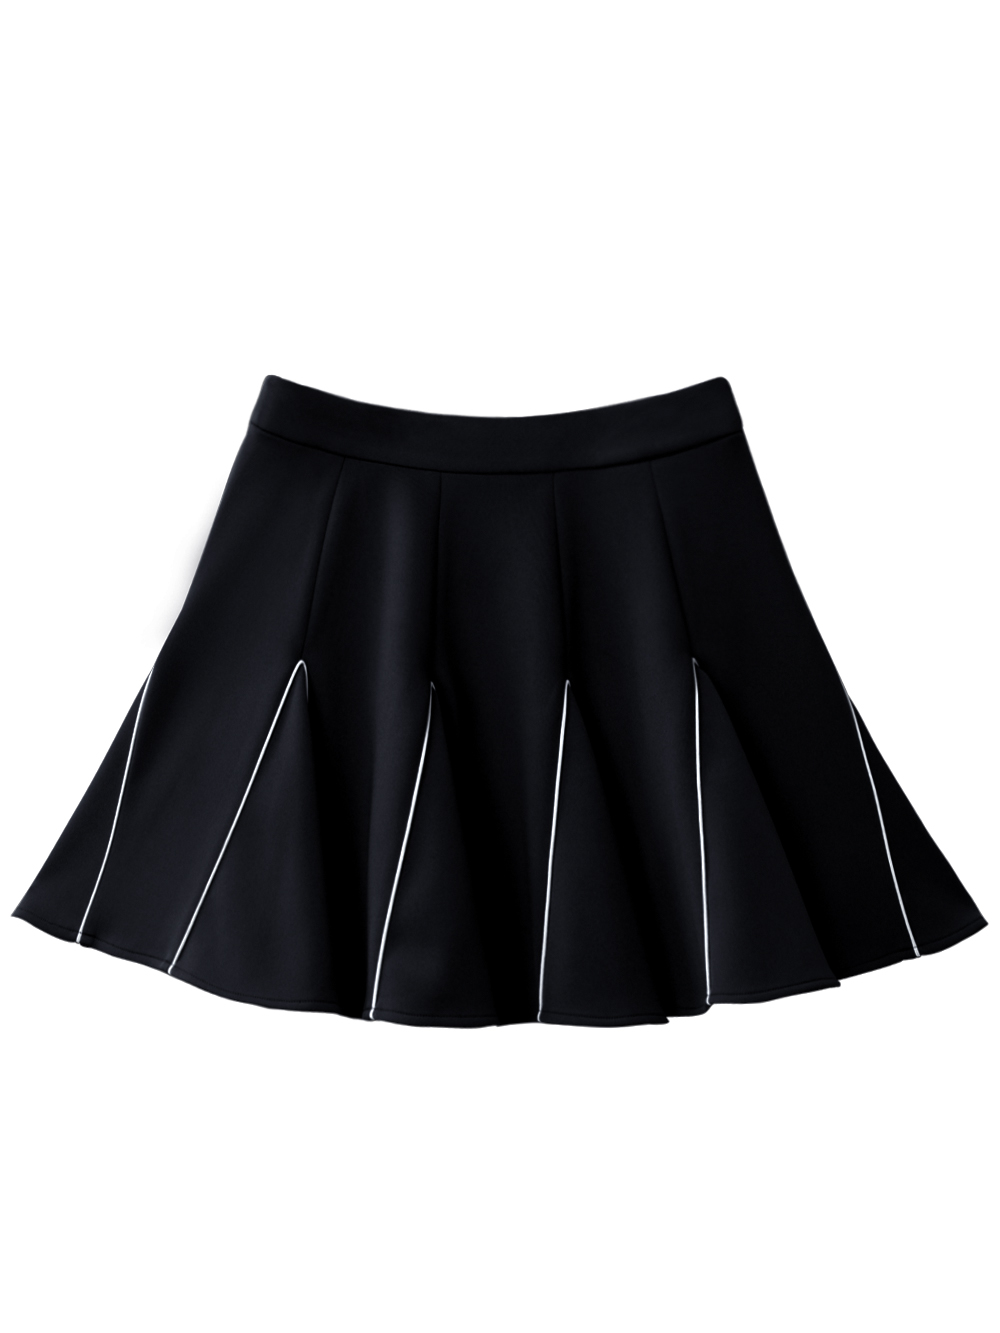 UTAA Wild Panther Color Flare Skirt  :  Black (UC4SKF326BK)